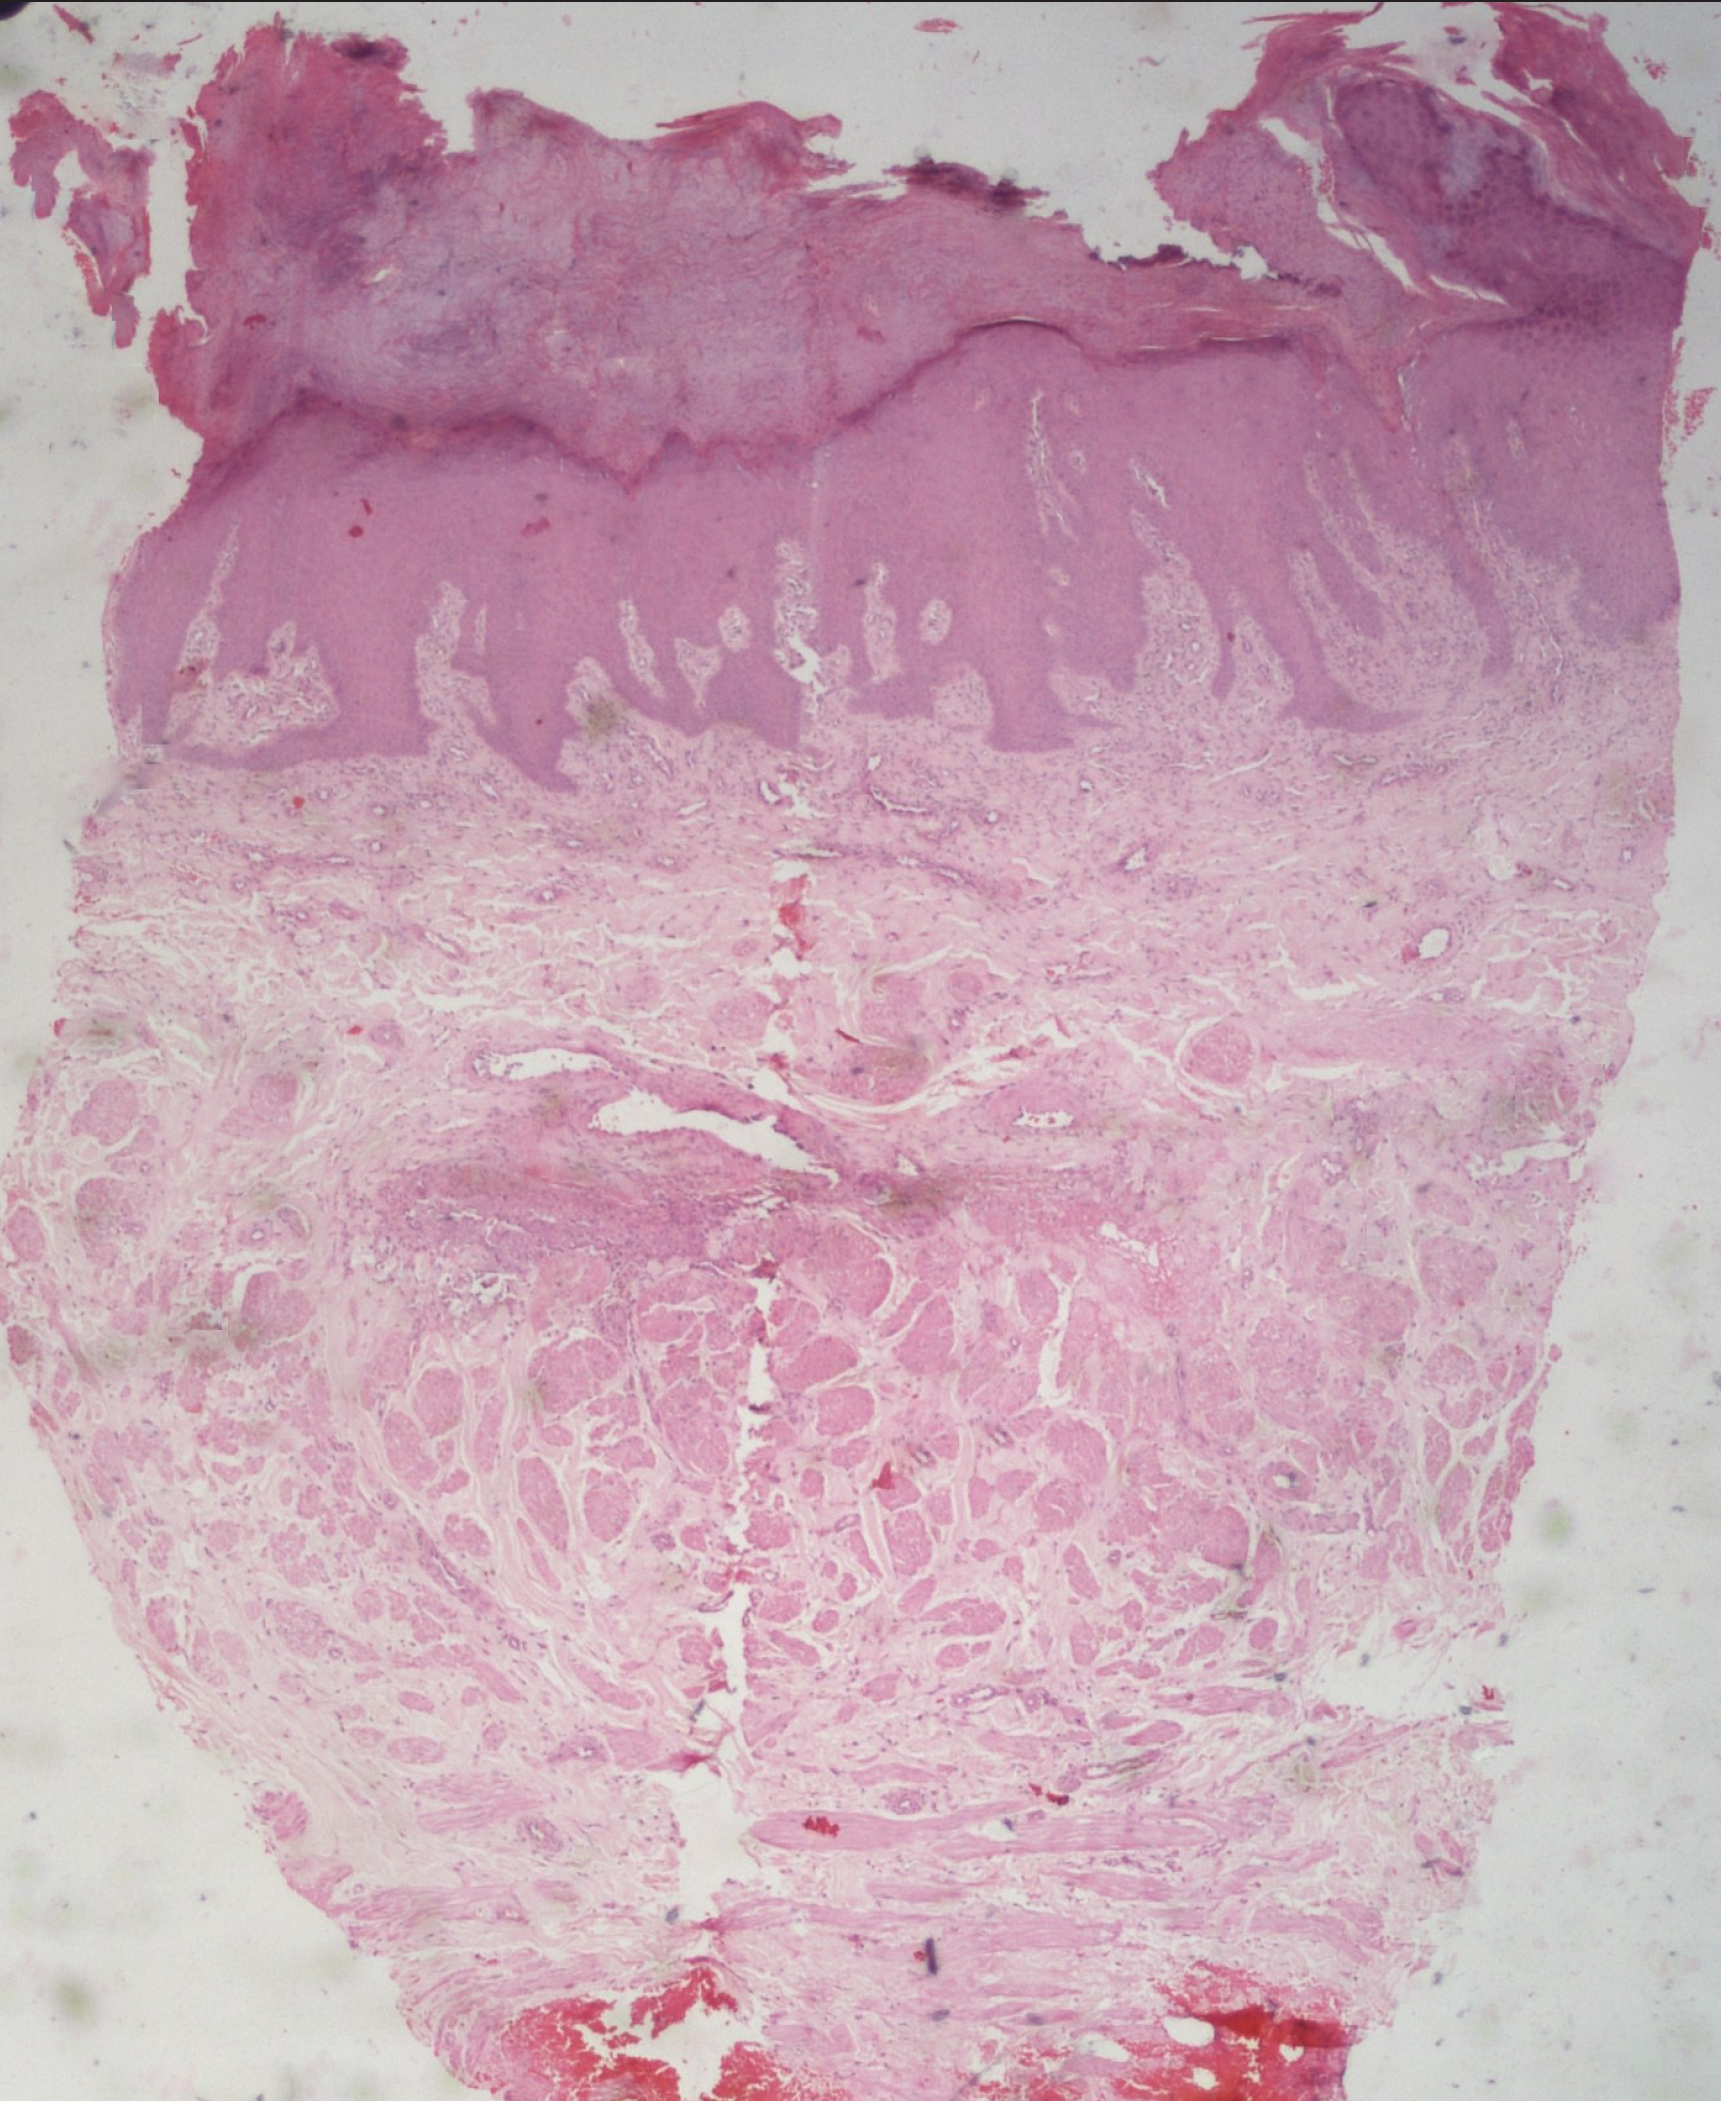 Massive hyperkeratosis, parakeratosis, irregular acanthosis, papillary dermal fibrosis, increased capillary proliferation in the papillary dermis, a perivascular lymphohistiocytic infiltrate, suggestive of prurigo nodularis (H & E ×20)